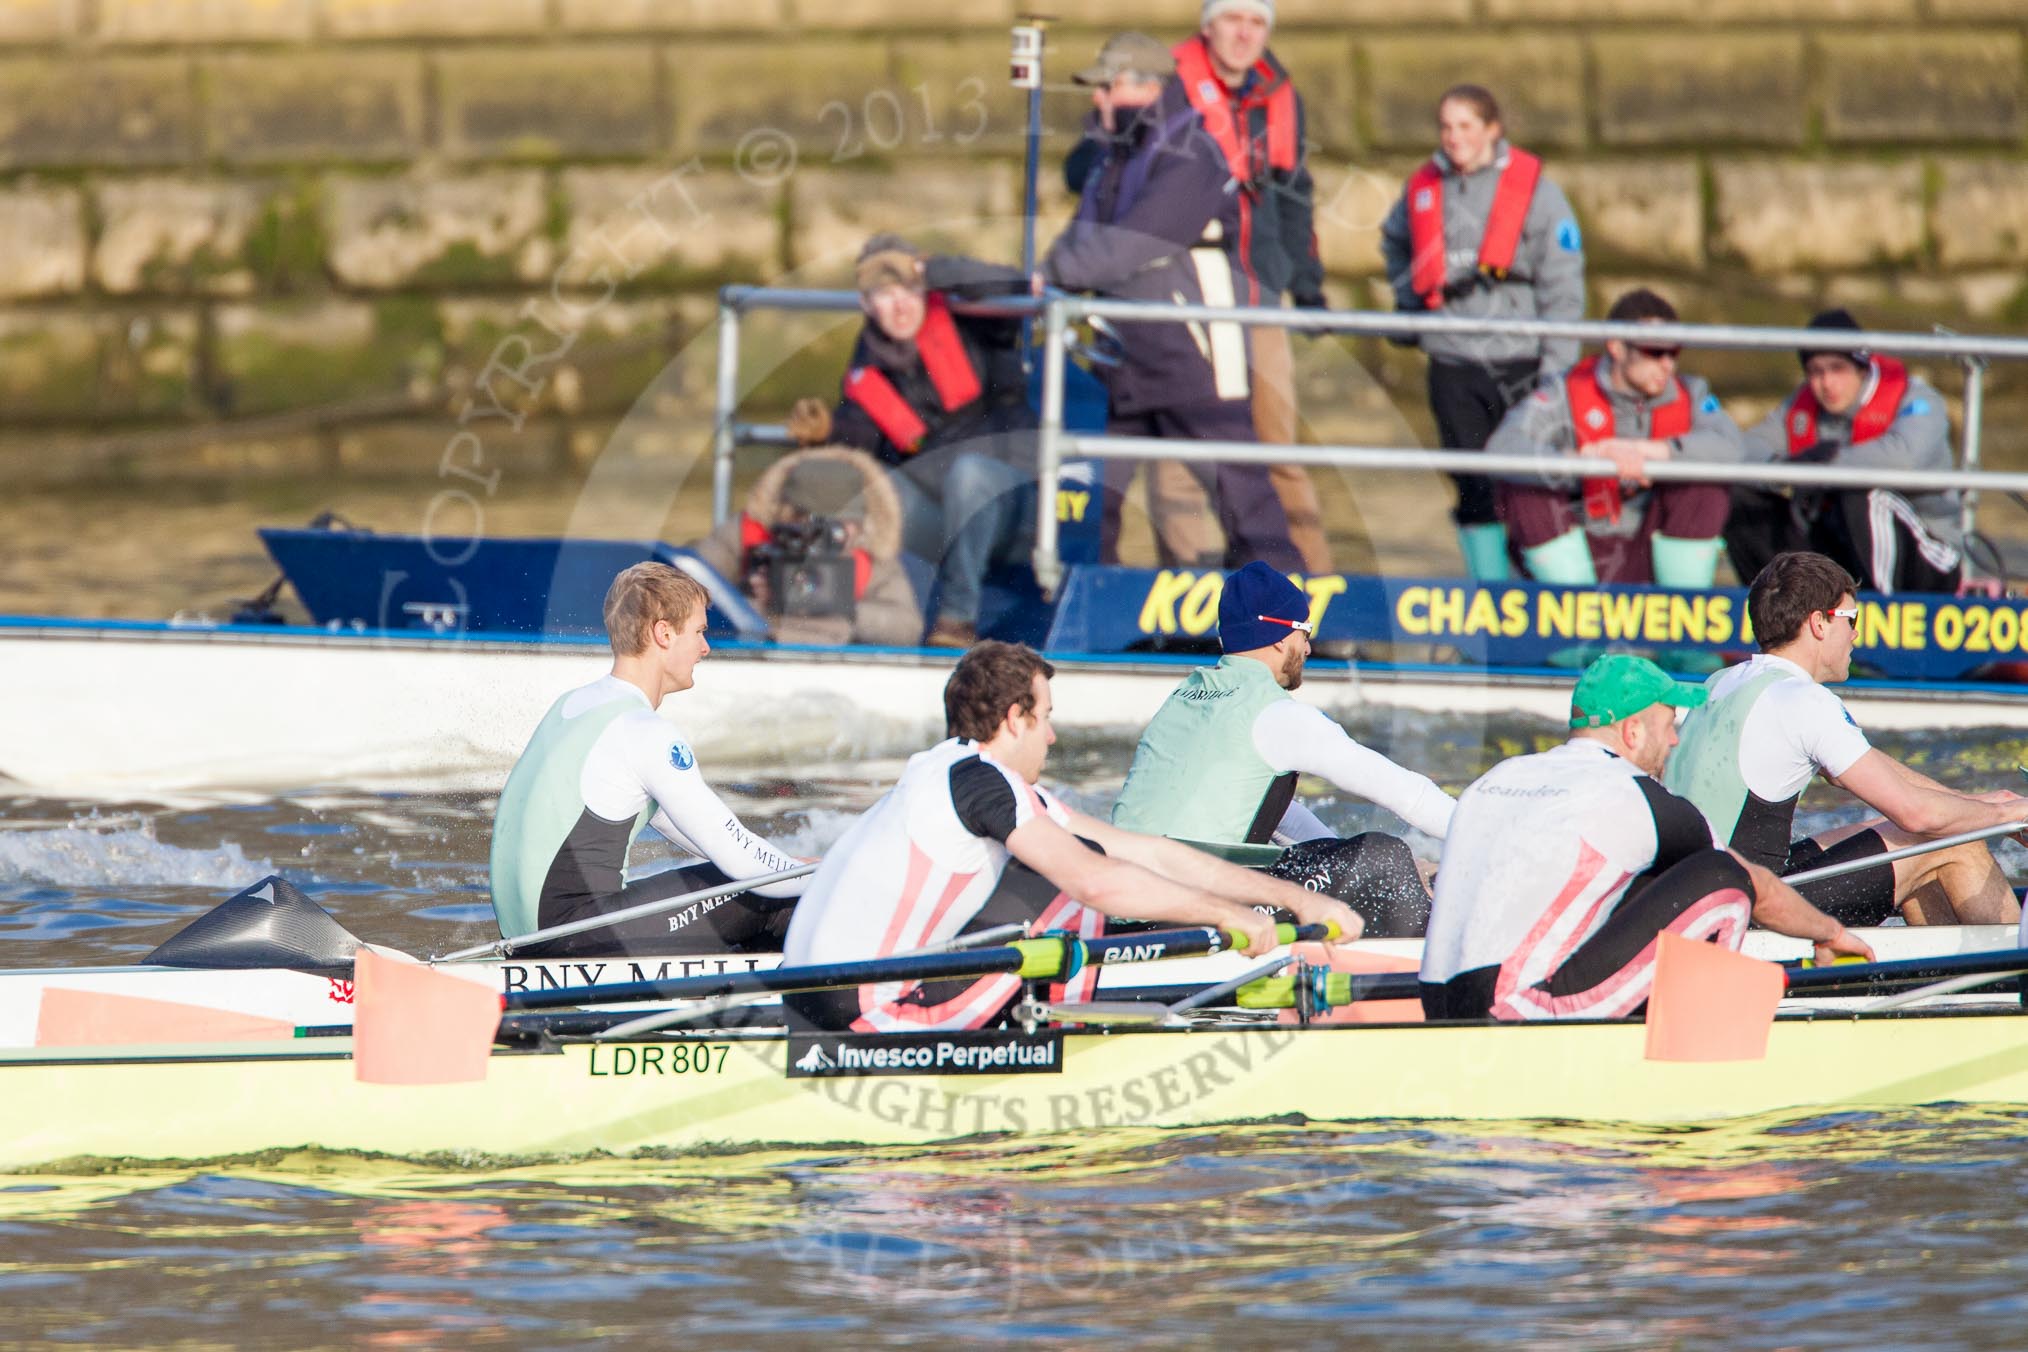 The Boat Race season 2013 - fixture CUBC vs Leander.
River Thames Tideway between Putney Bridge and Mortlake,
London SW15,

United Kingdom,
on 02 March 2013 at 15:58, image #115